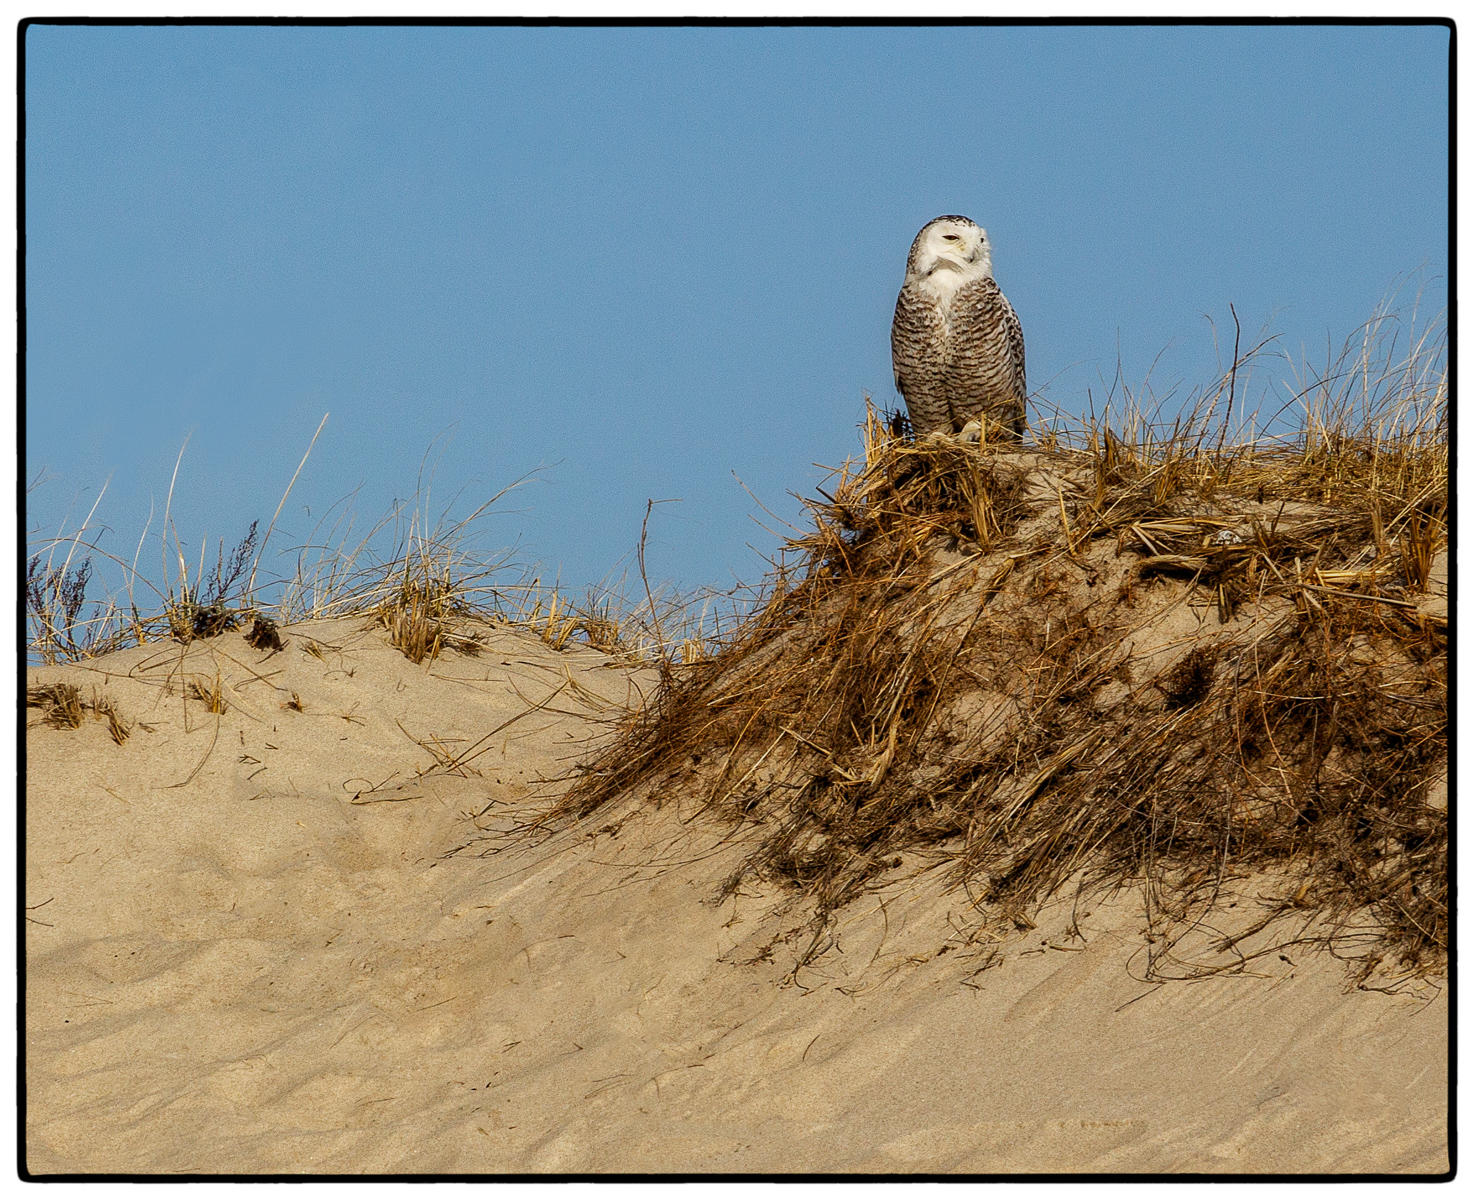 Snowy Owl Dune Perch
